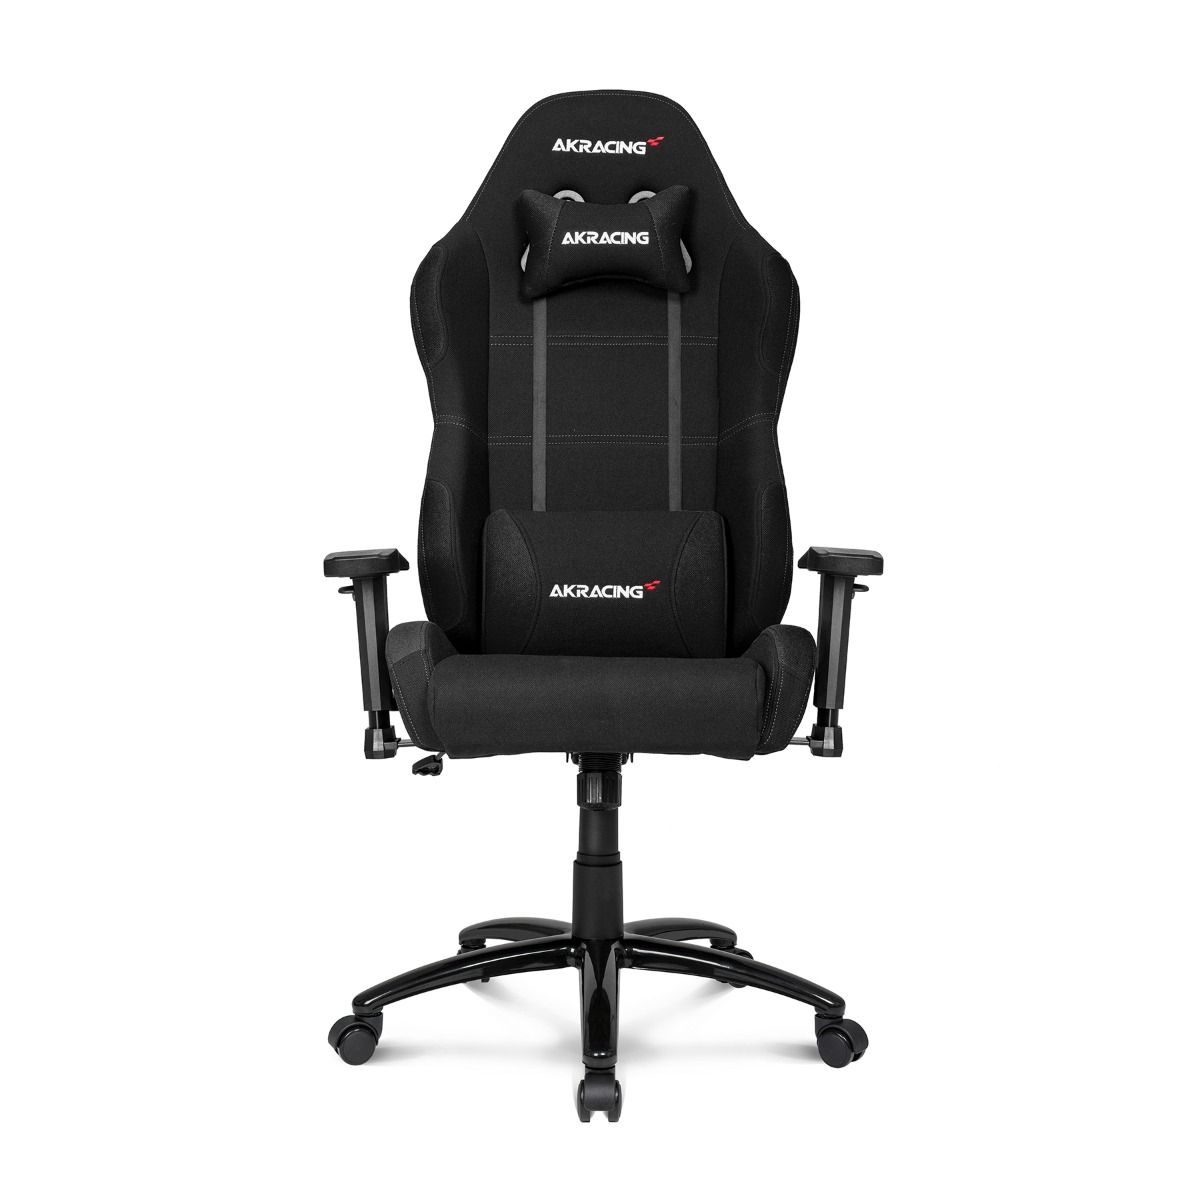 AKRACING K7012 Gaming Chair Black